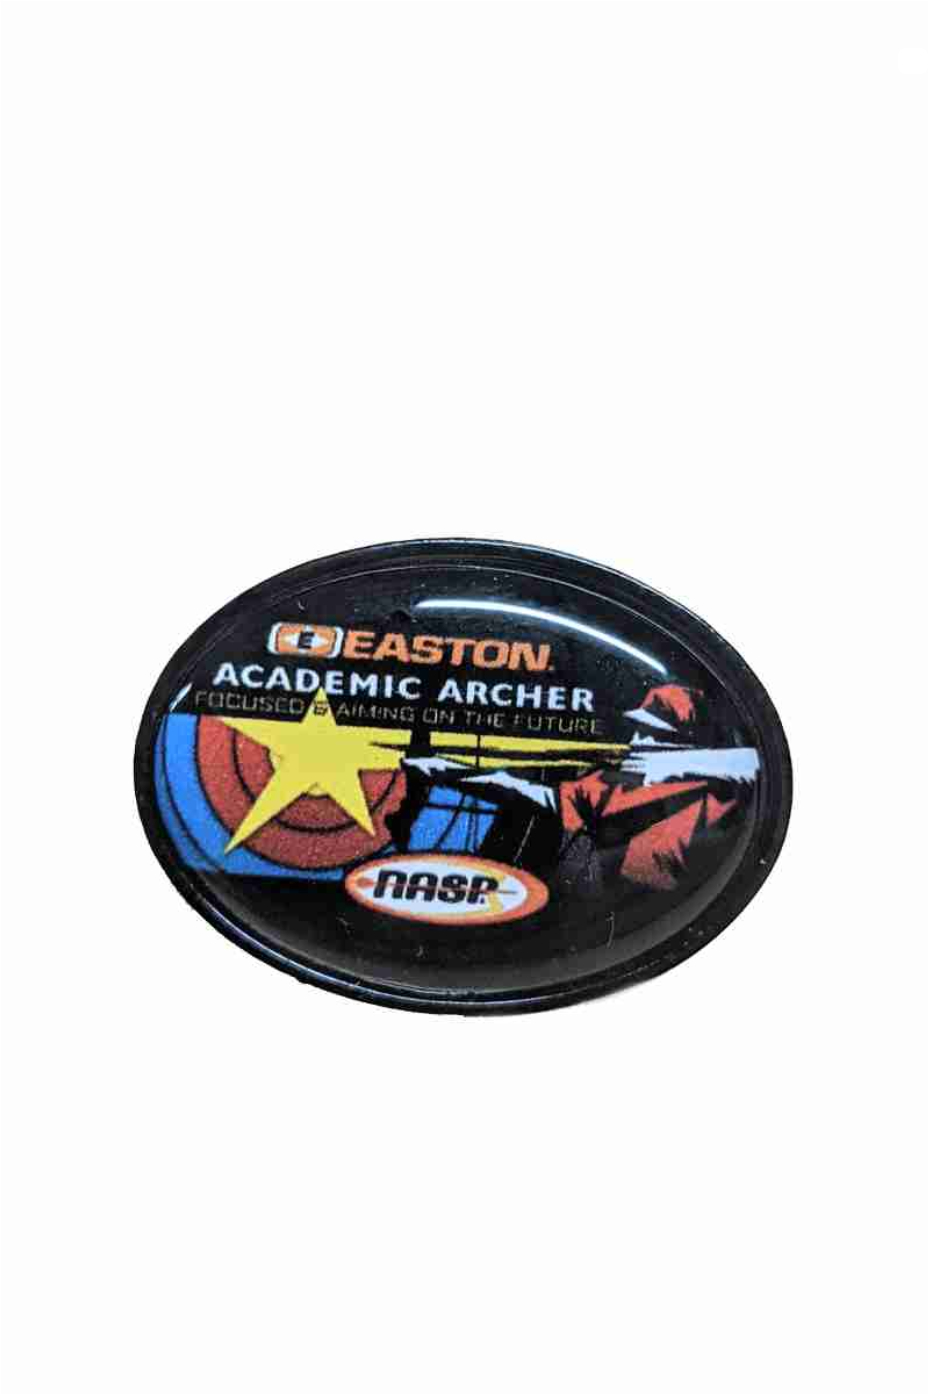 NASP® Academic Archer Lapel Pin